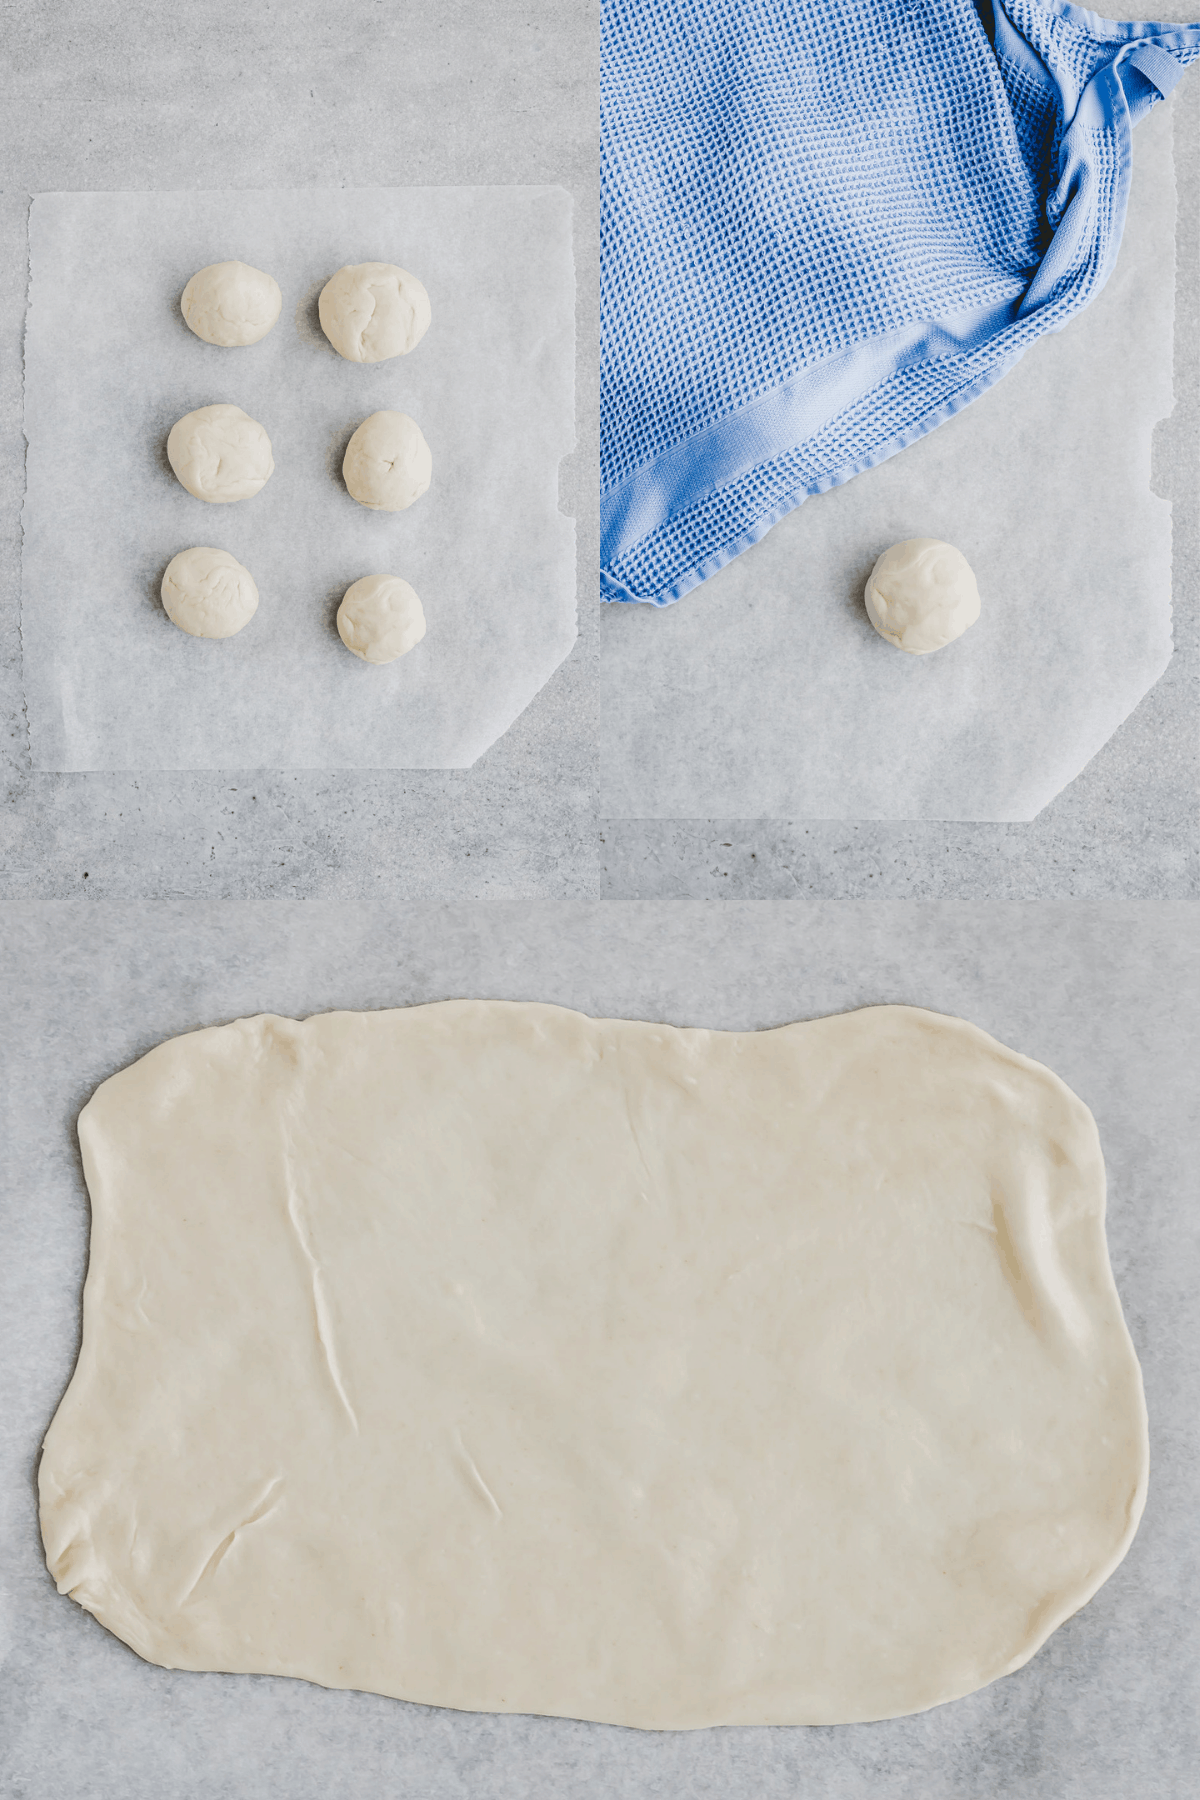 Scallion Pancakes Recipe Step 4-6